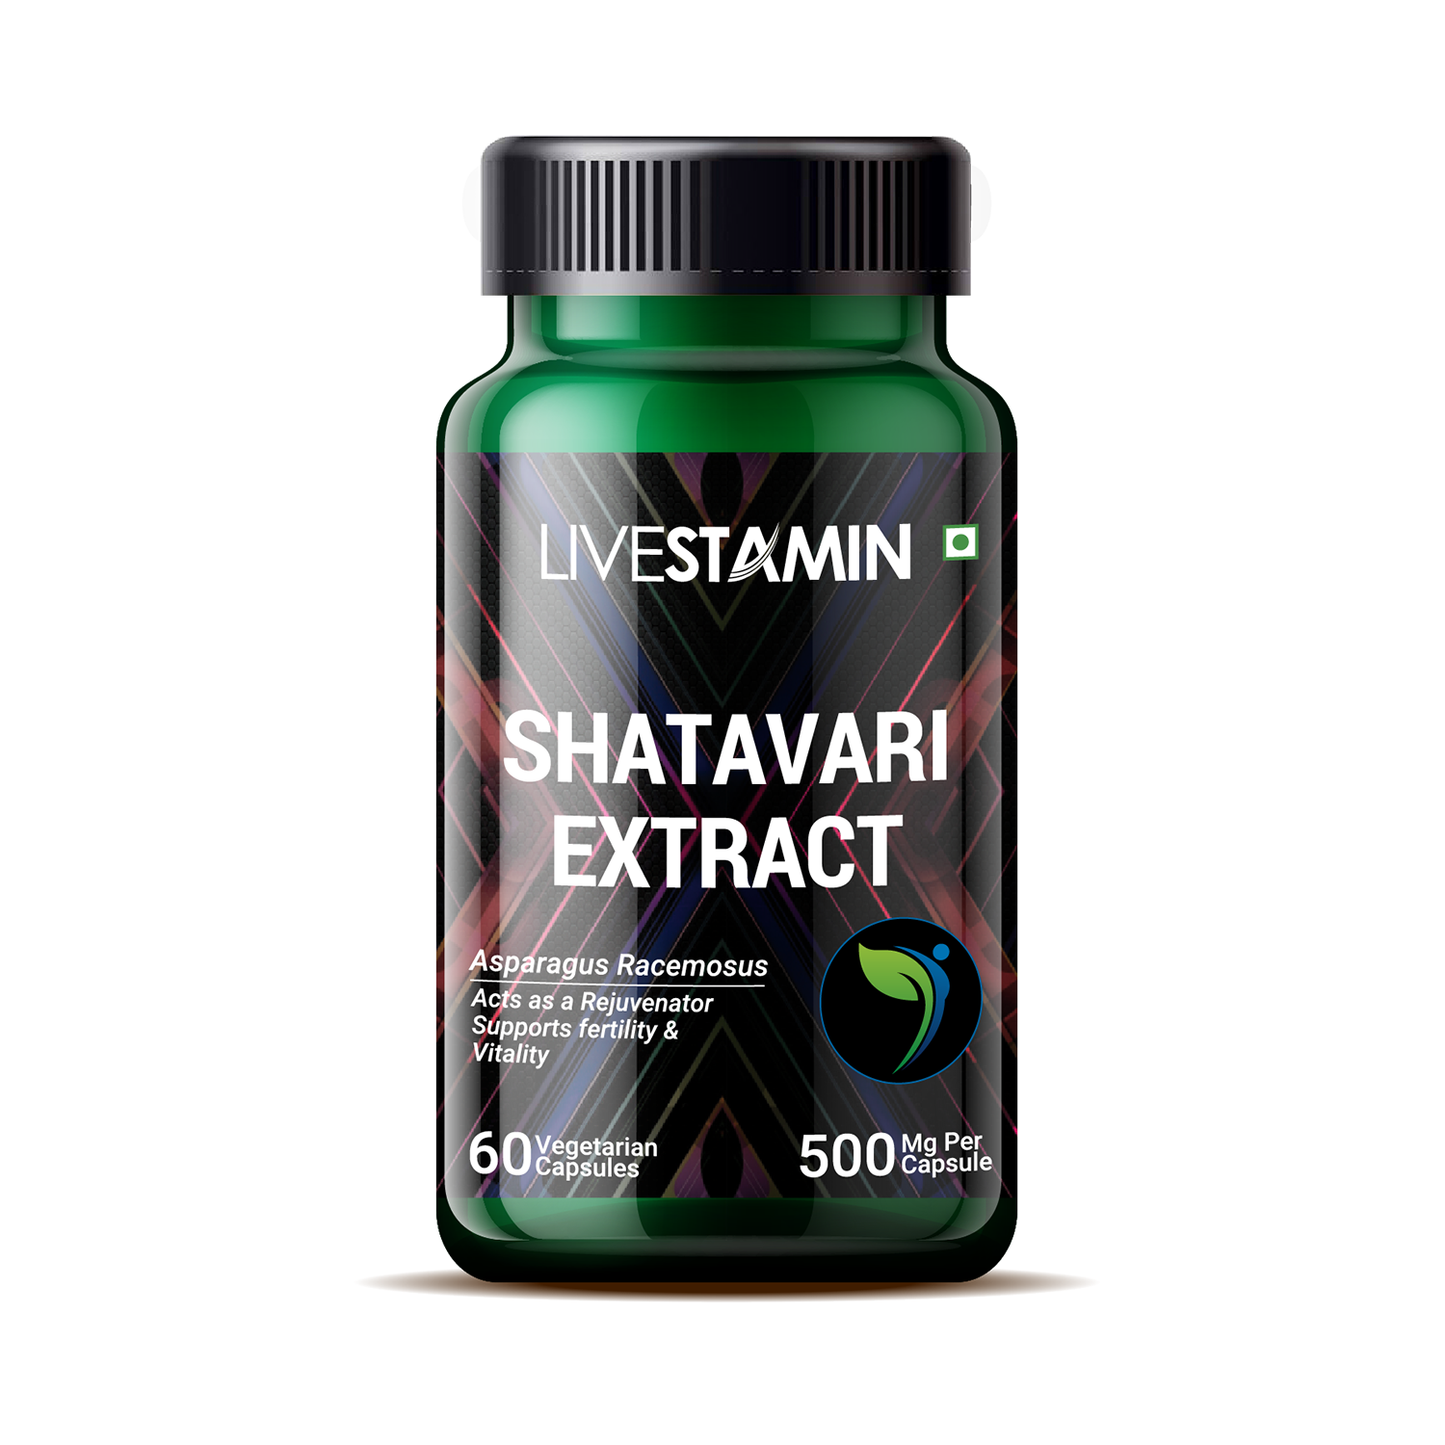 Livestamin Shatavari (Saponins > 20%) Extract, 500 mg - 60 Vegetarian Capsules